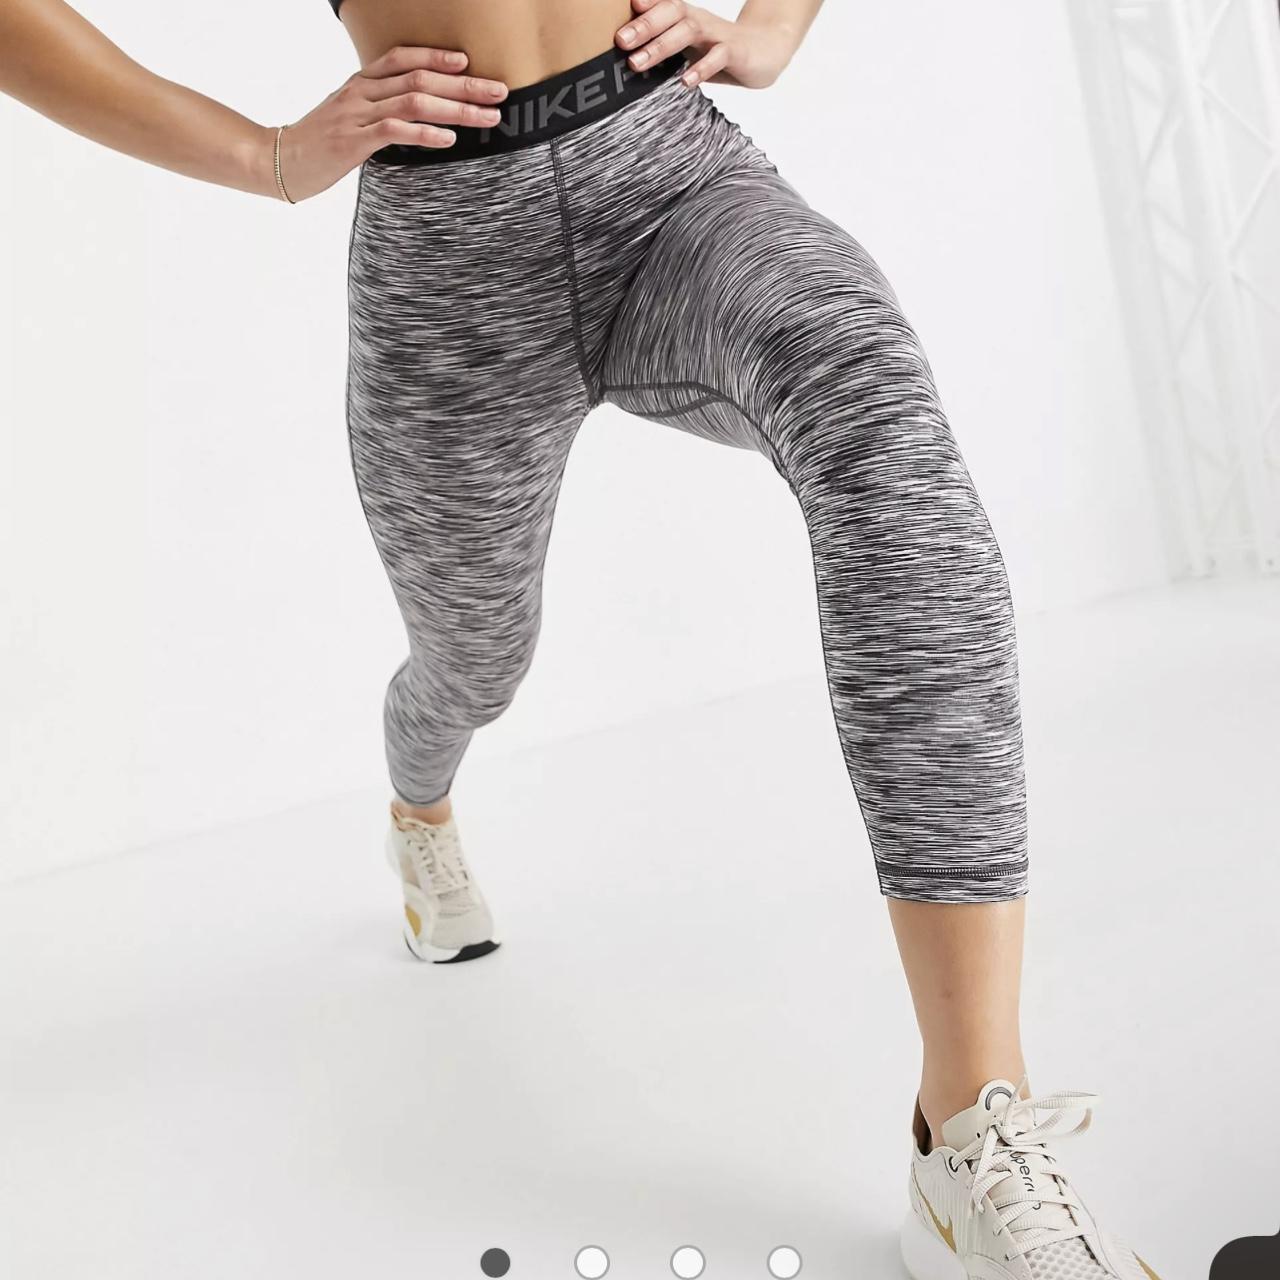 Nike Pro Training cropped leggings in grey